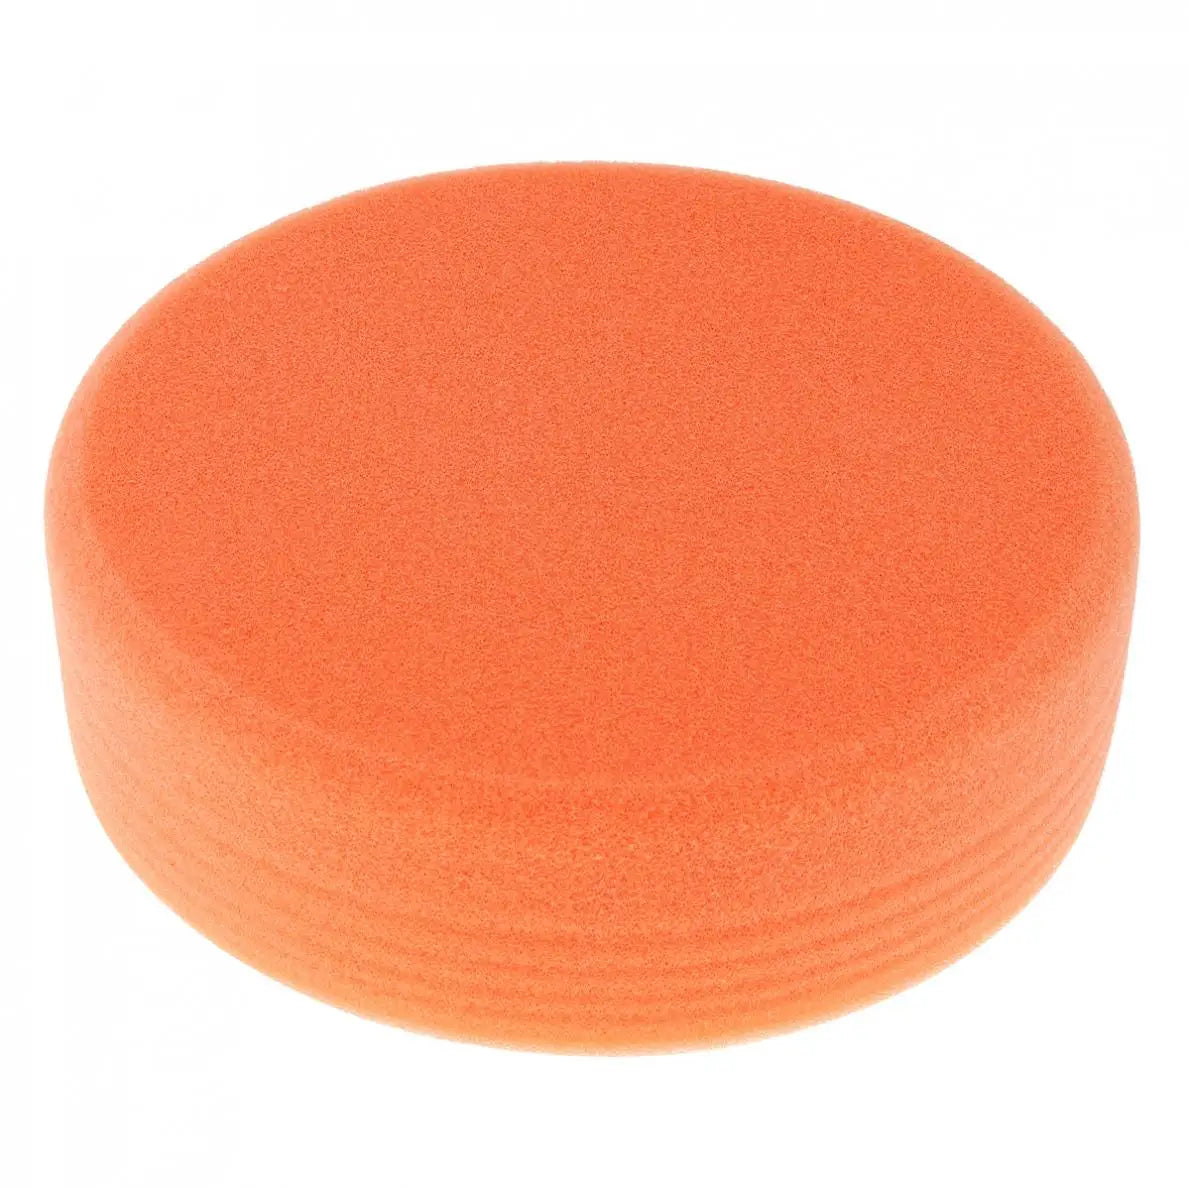 6 Inch High Density Soft Car Waxing Polished Orange Sponge Wheel